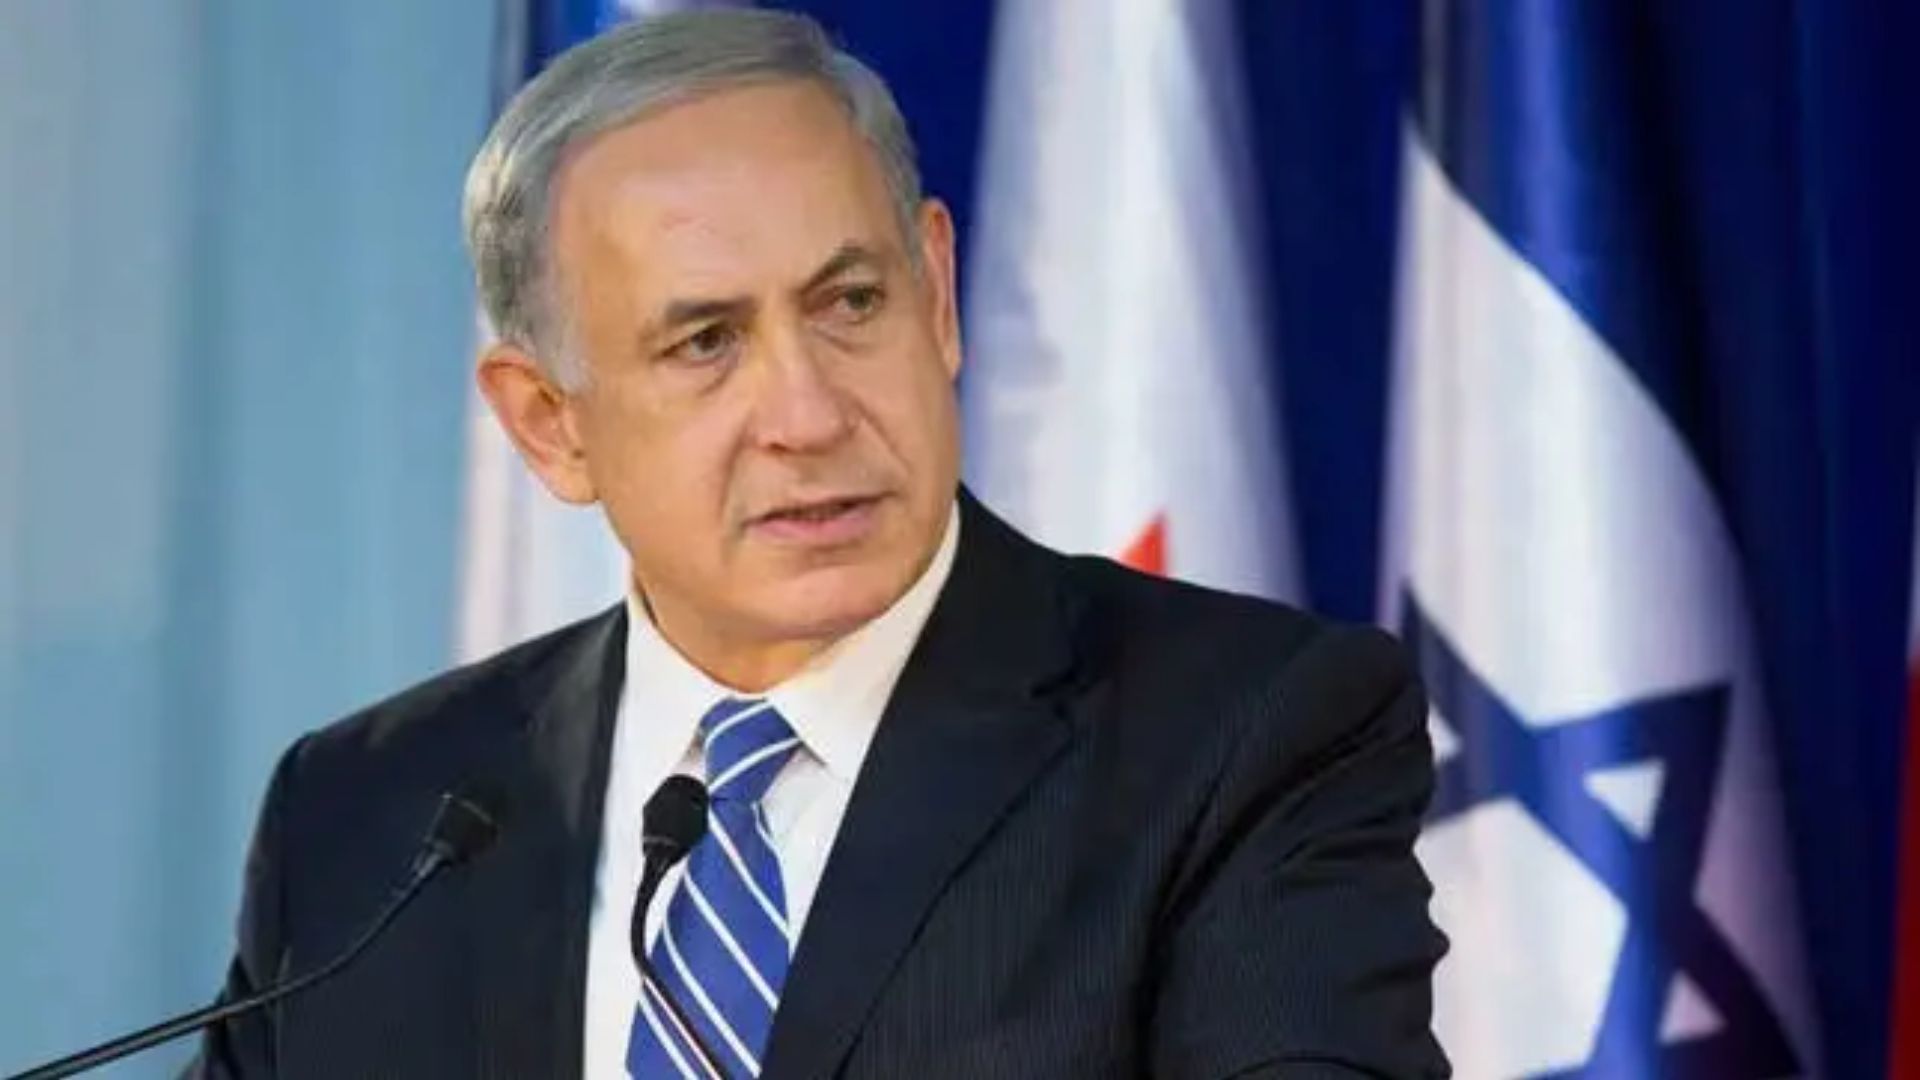 Tensions Rise as Biden Imposes Sanctions on Israeli “Extremist Settlers,” Netanyahu Hits Back